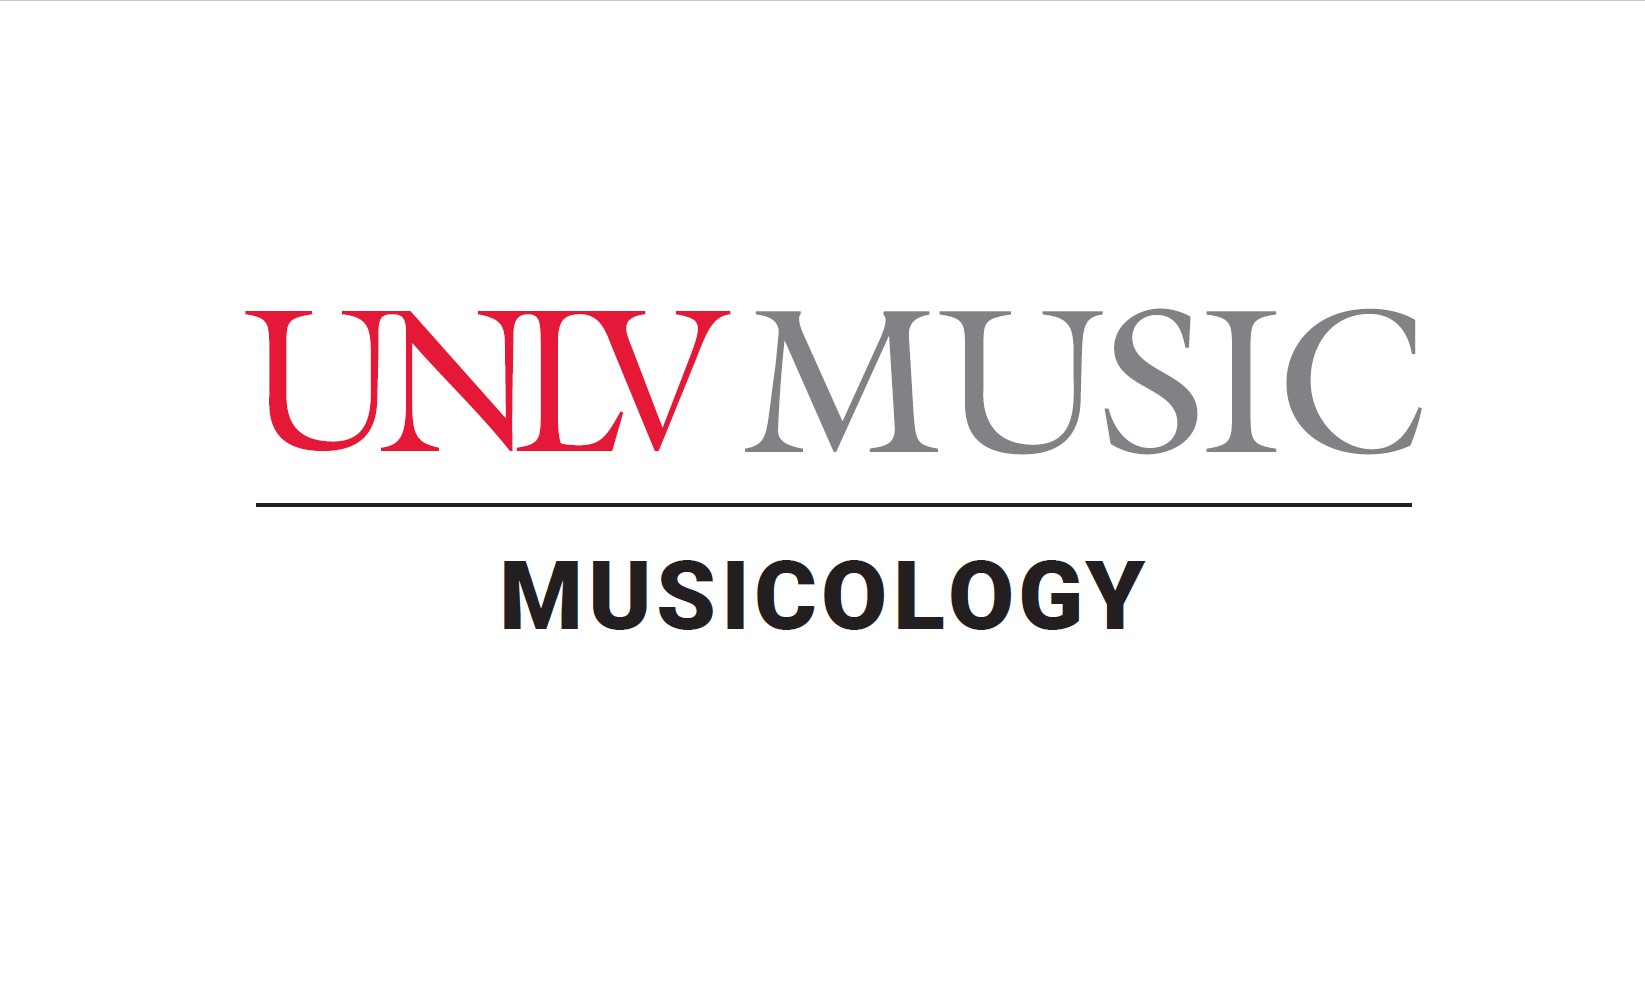 UNLV Musicology logo